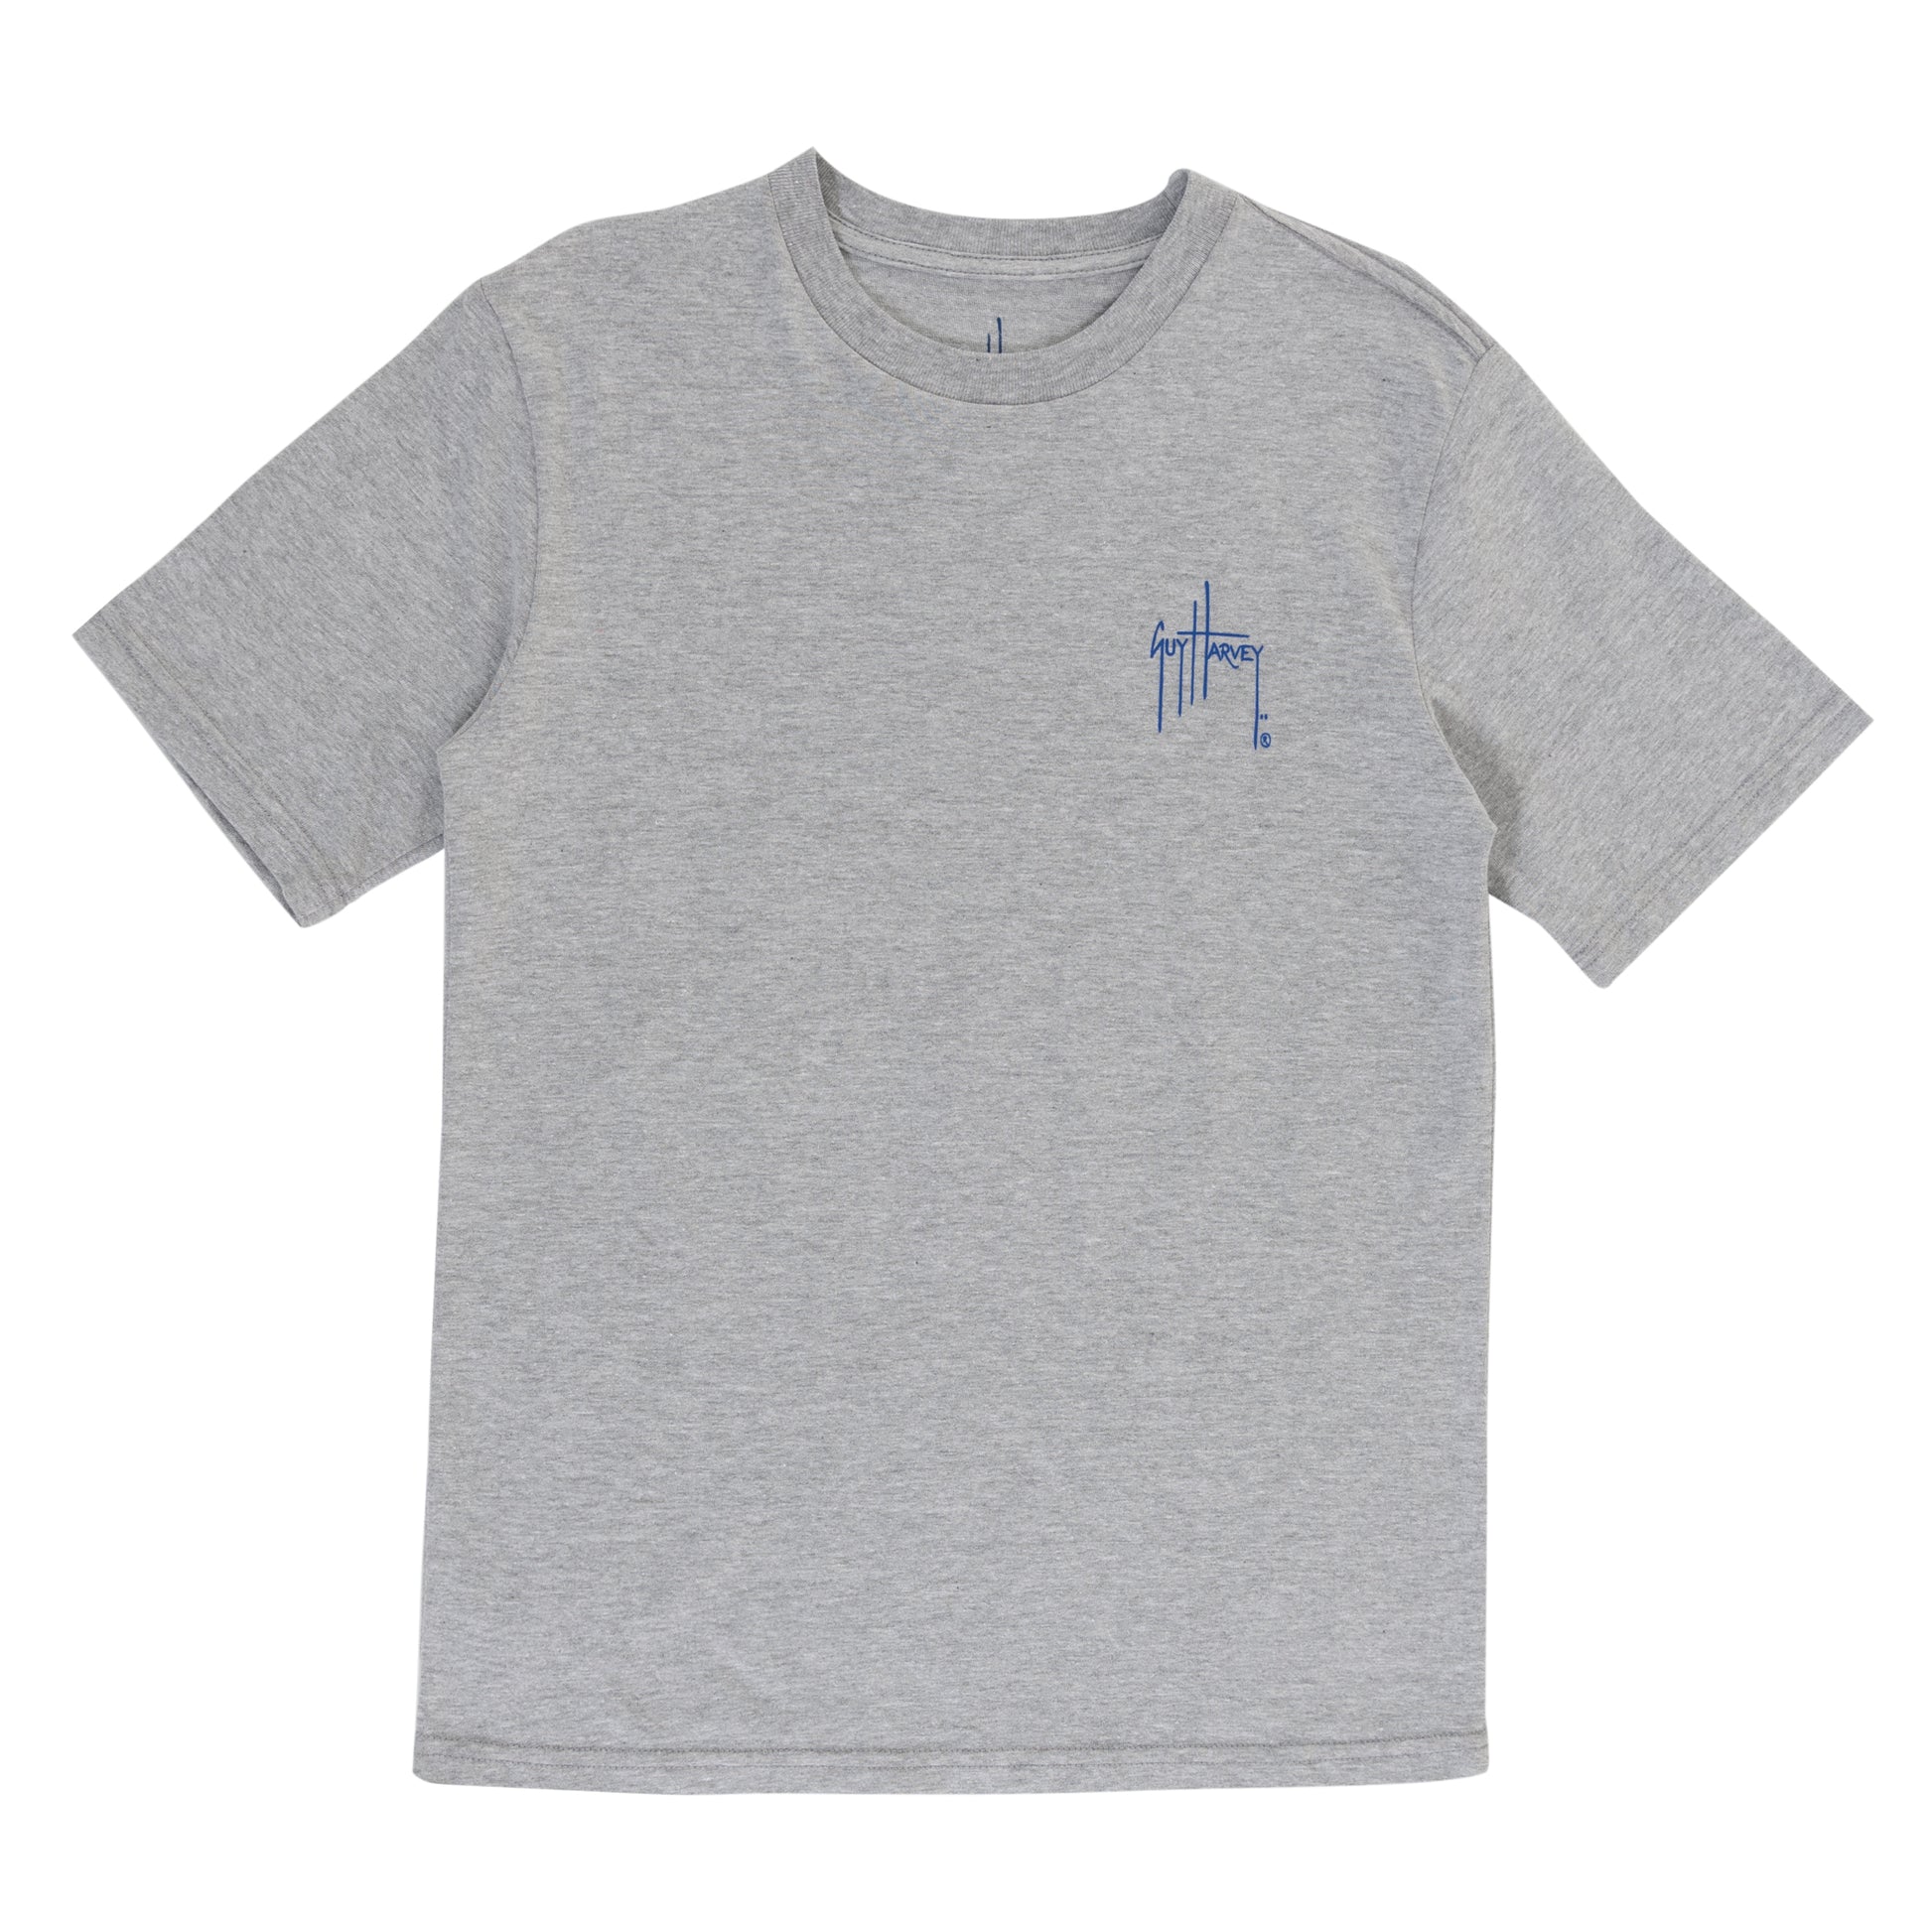 Boy's Shark Squad Short Sleeve Grey T-Shirt View 5